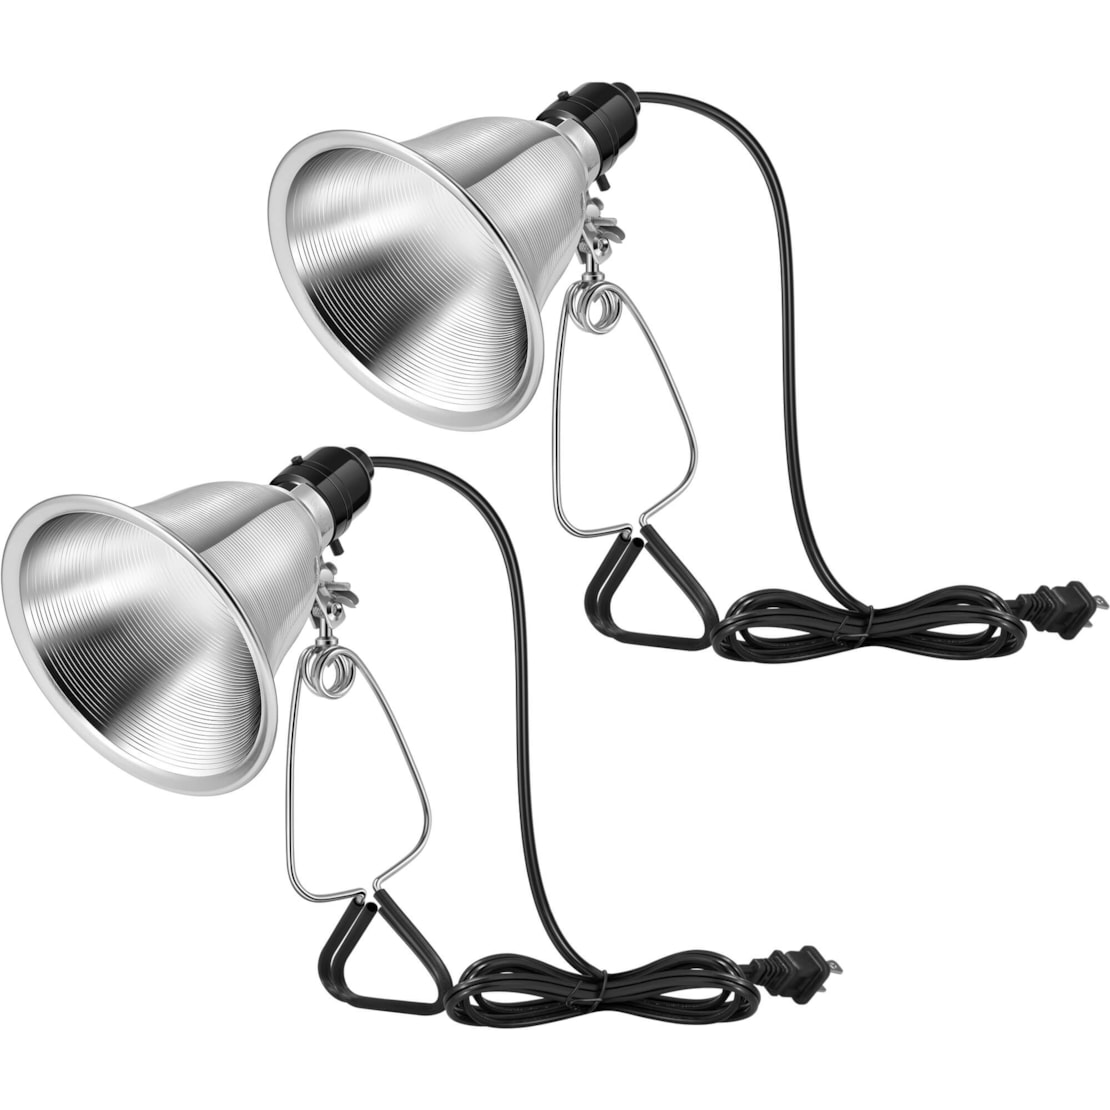 VIVOSUN 5.5 Inch Clamp Lamp Light, Pack of 2